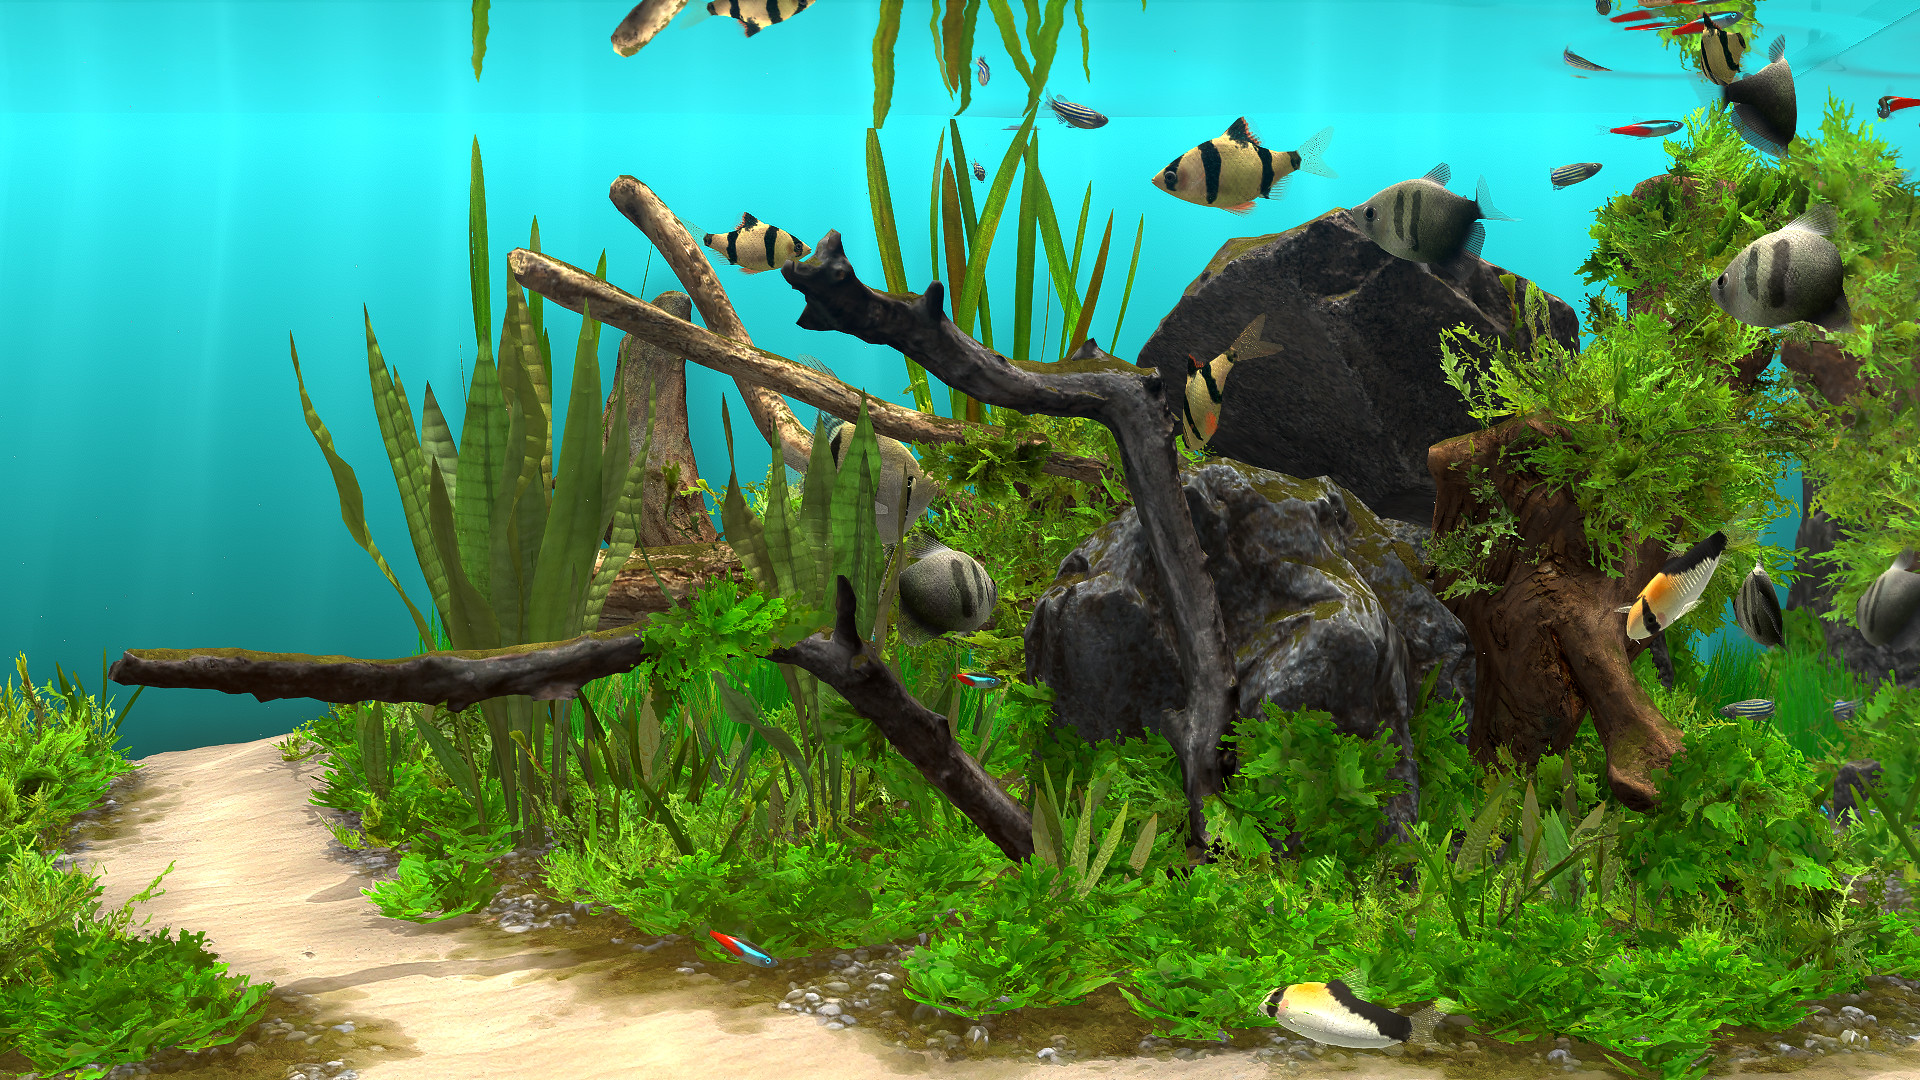 Behind Glass: Aquarium Simulator Free Download